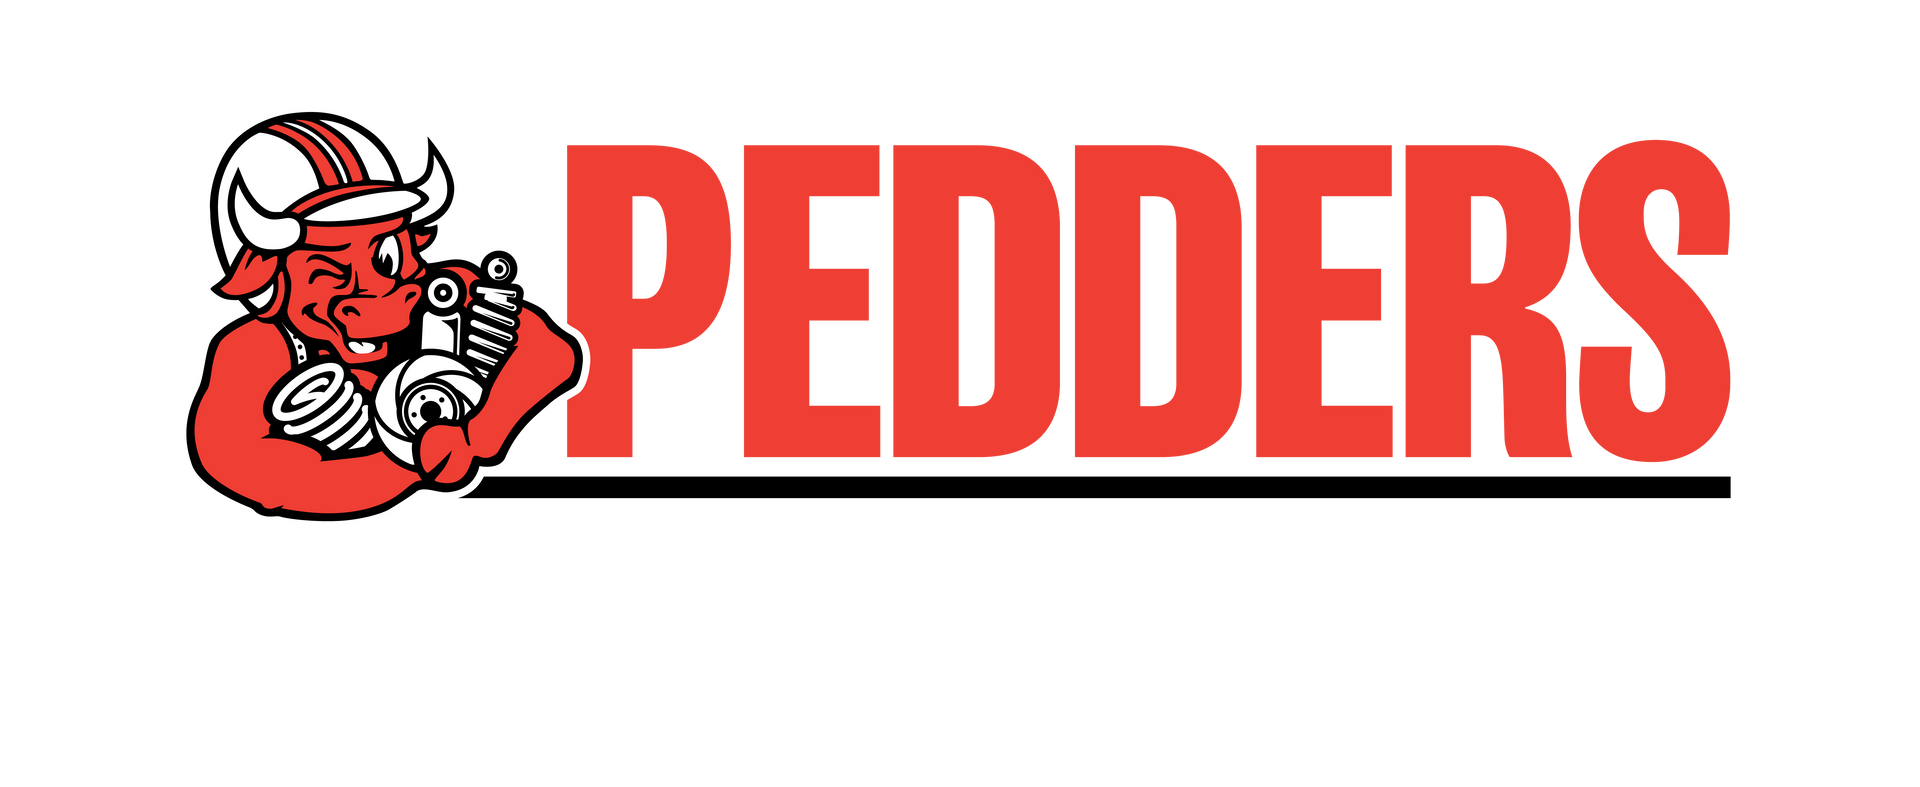 Pedders Stocklist